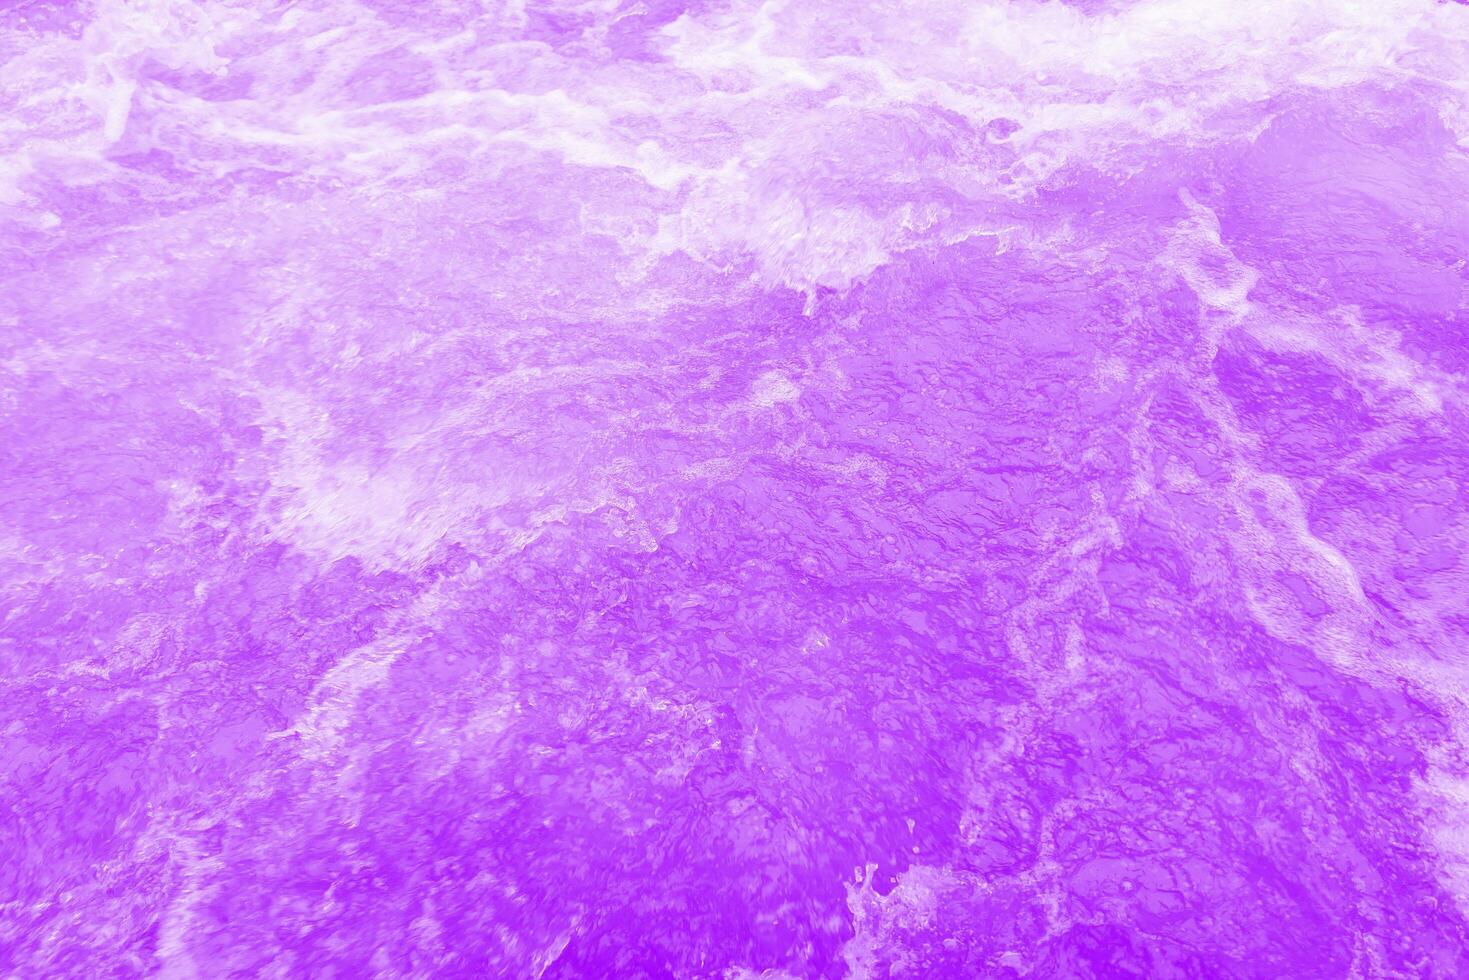 púrpura agua con ondas en el superficie. desenfocar borroso transparente azul de colores claro calma agua superficie textura con salpicaduras y burbujas agua olas con brillante modelo textura antecedentes. foto